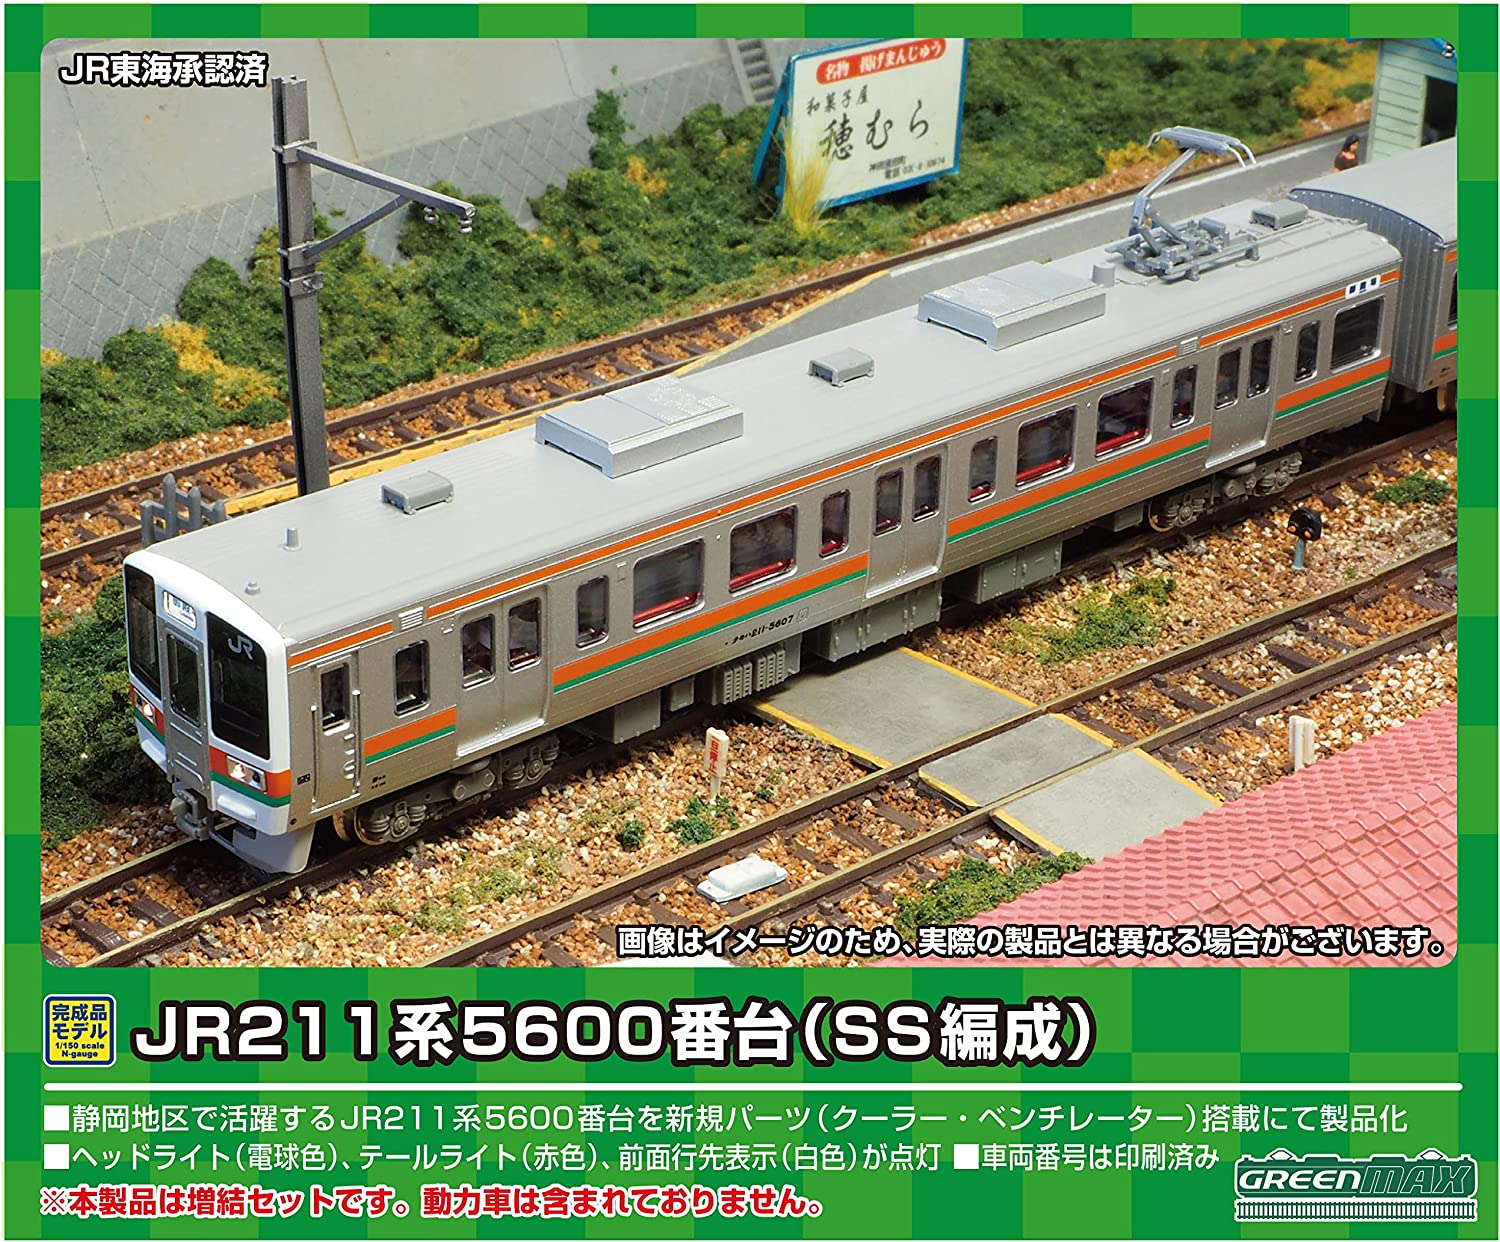 31685 J.R. Series 211-5600 (SS8 Formation) Additional Three Car